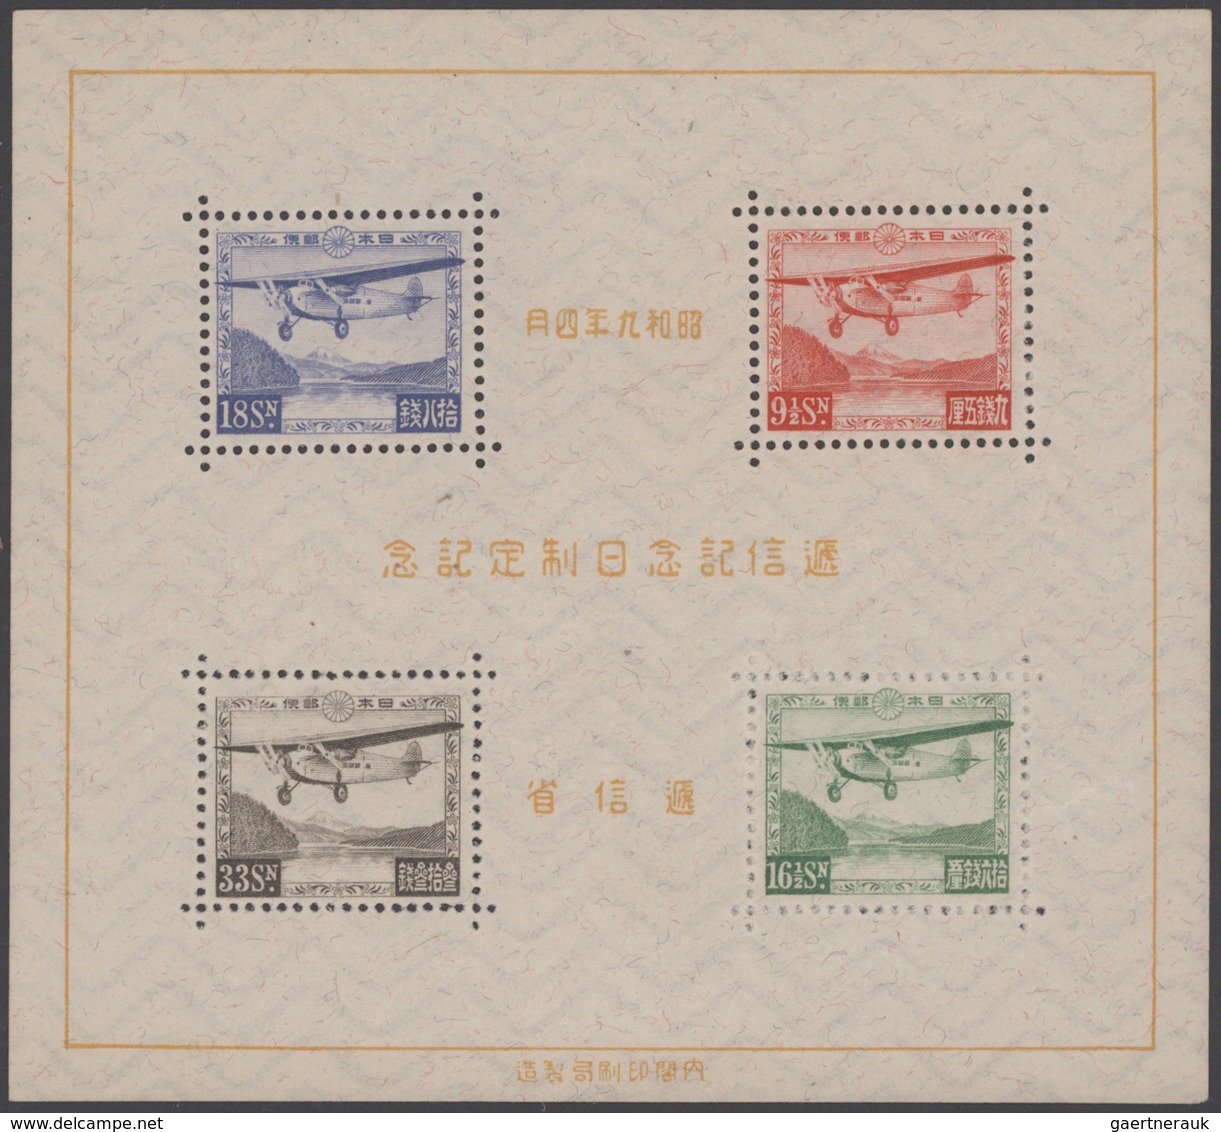 Asien: 1900/1970 (ca.), Balance On Stockcards, Incl. Some PRC, Japan 1934 Airmail Souvenir Sheet Min - Otros - Asia